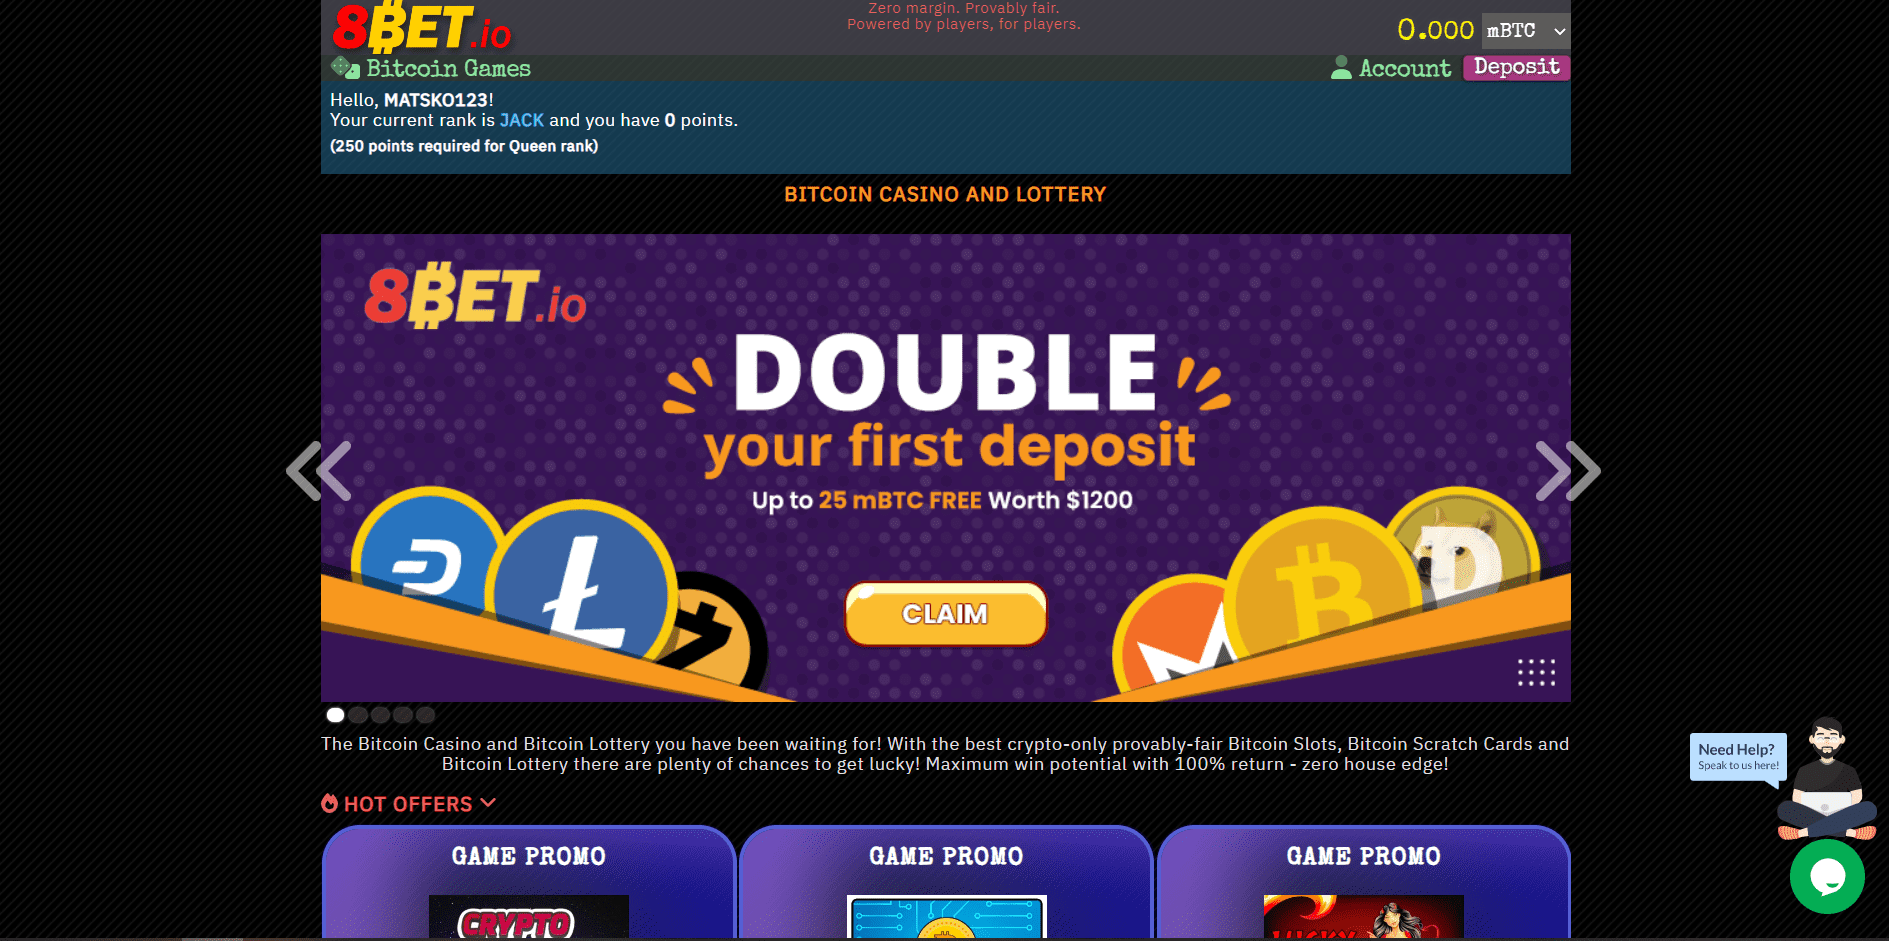 Screenshot of 8BET casino landing page